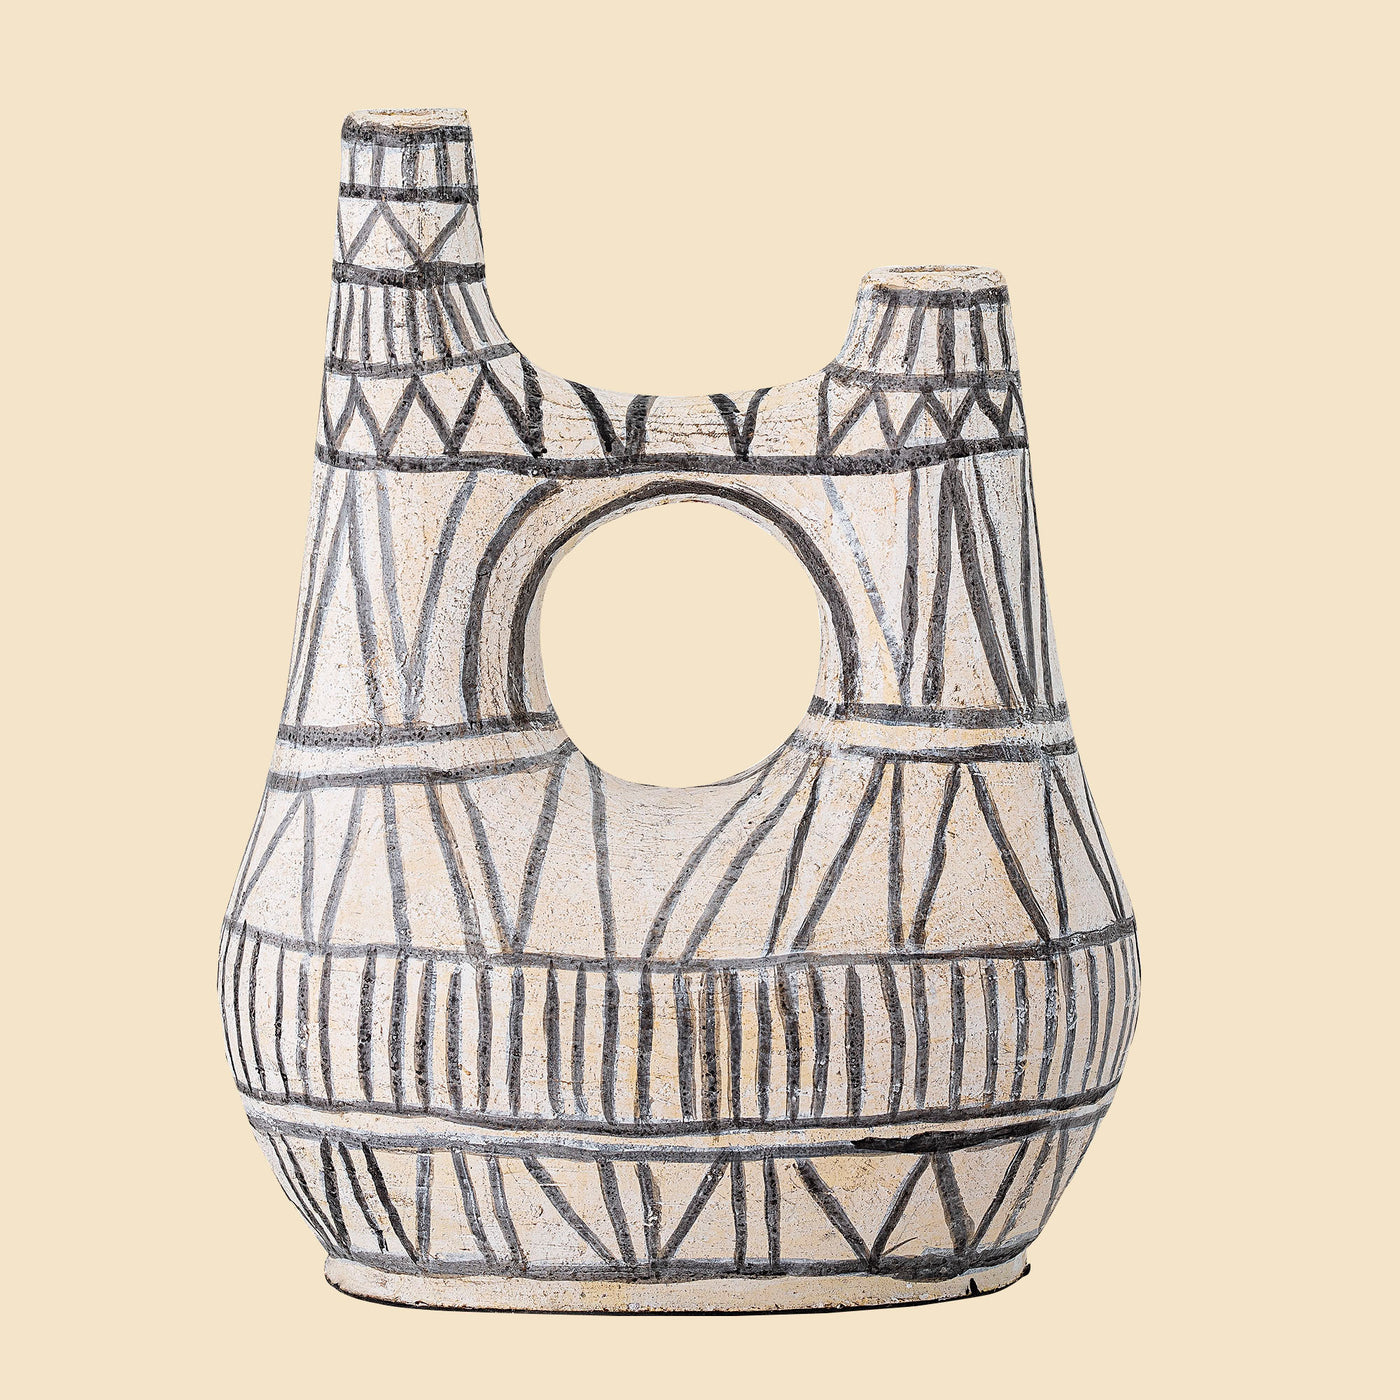 Yael Black and White Terracotta Vase